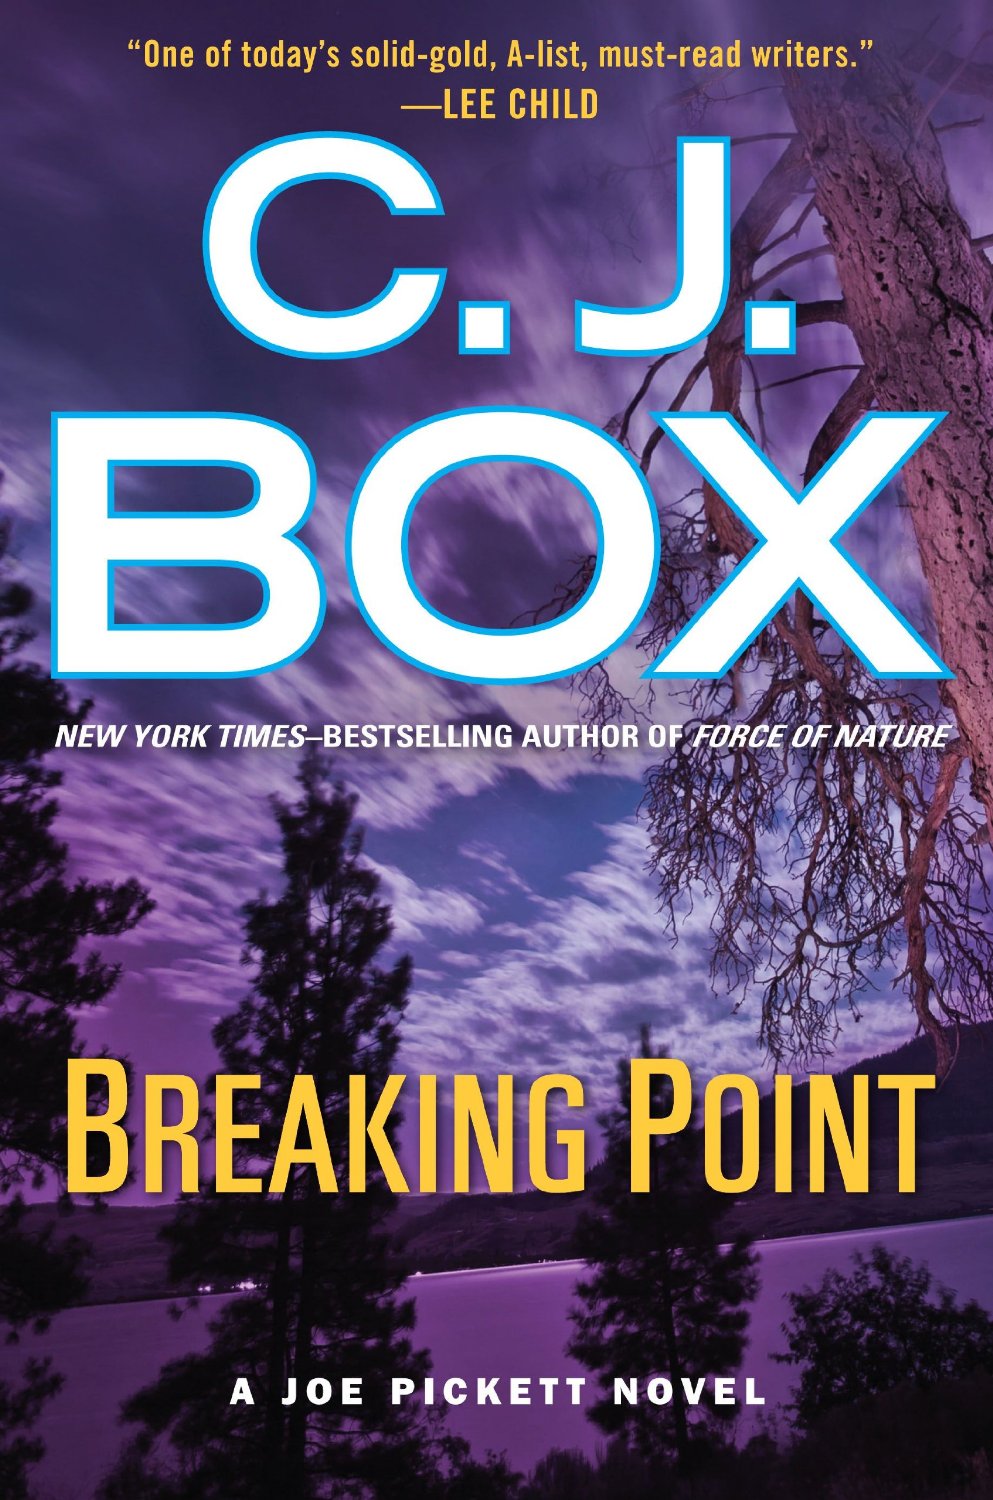 DBT #0148: C.J. Box – Breaking Point